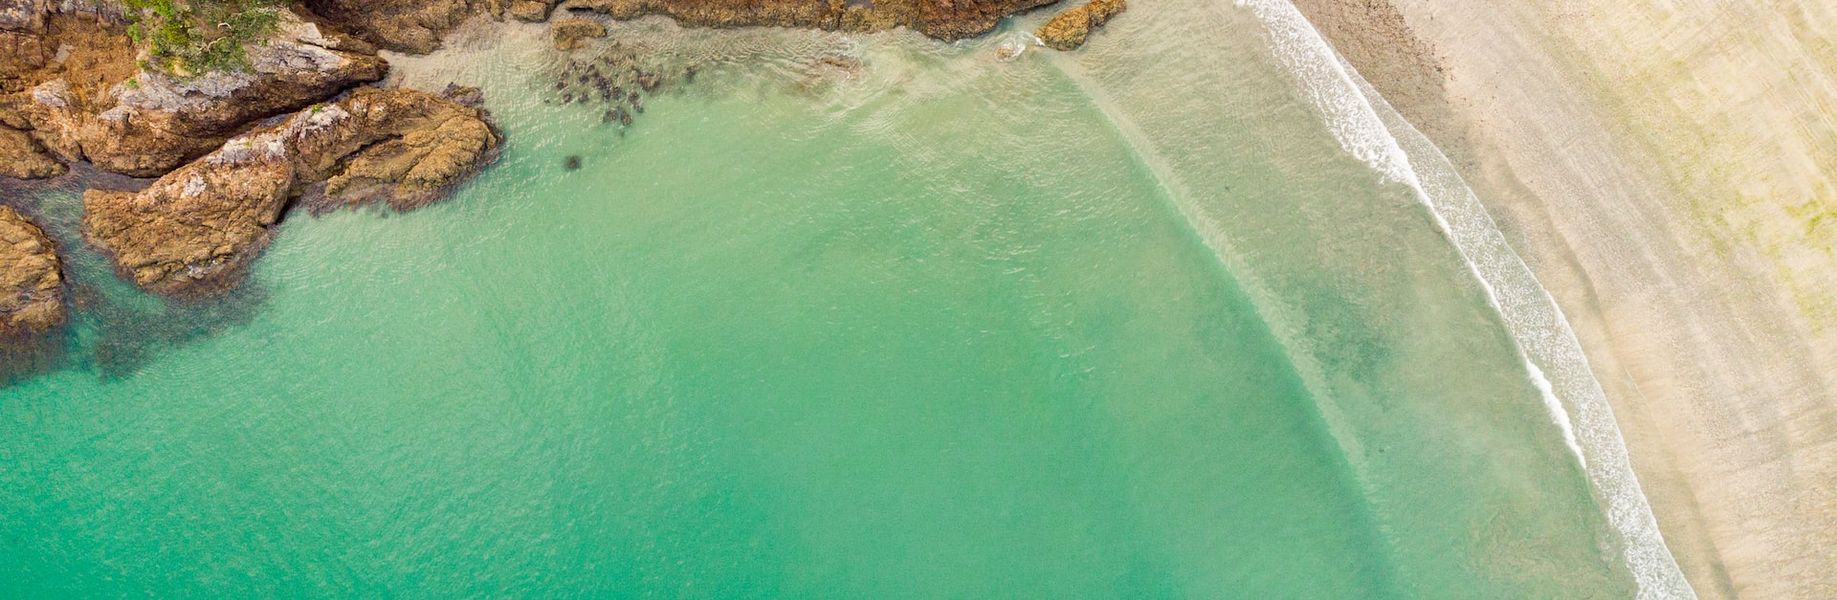 Waiheke Island, Beach Overhead Image from Drone